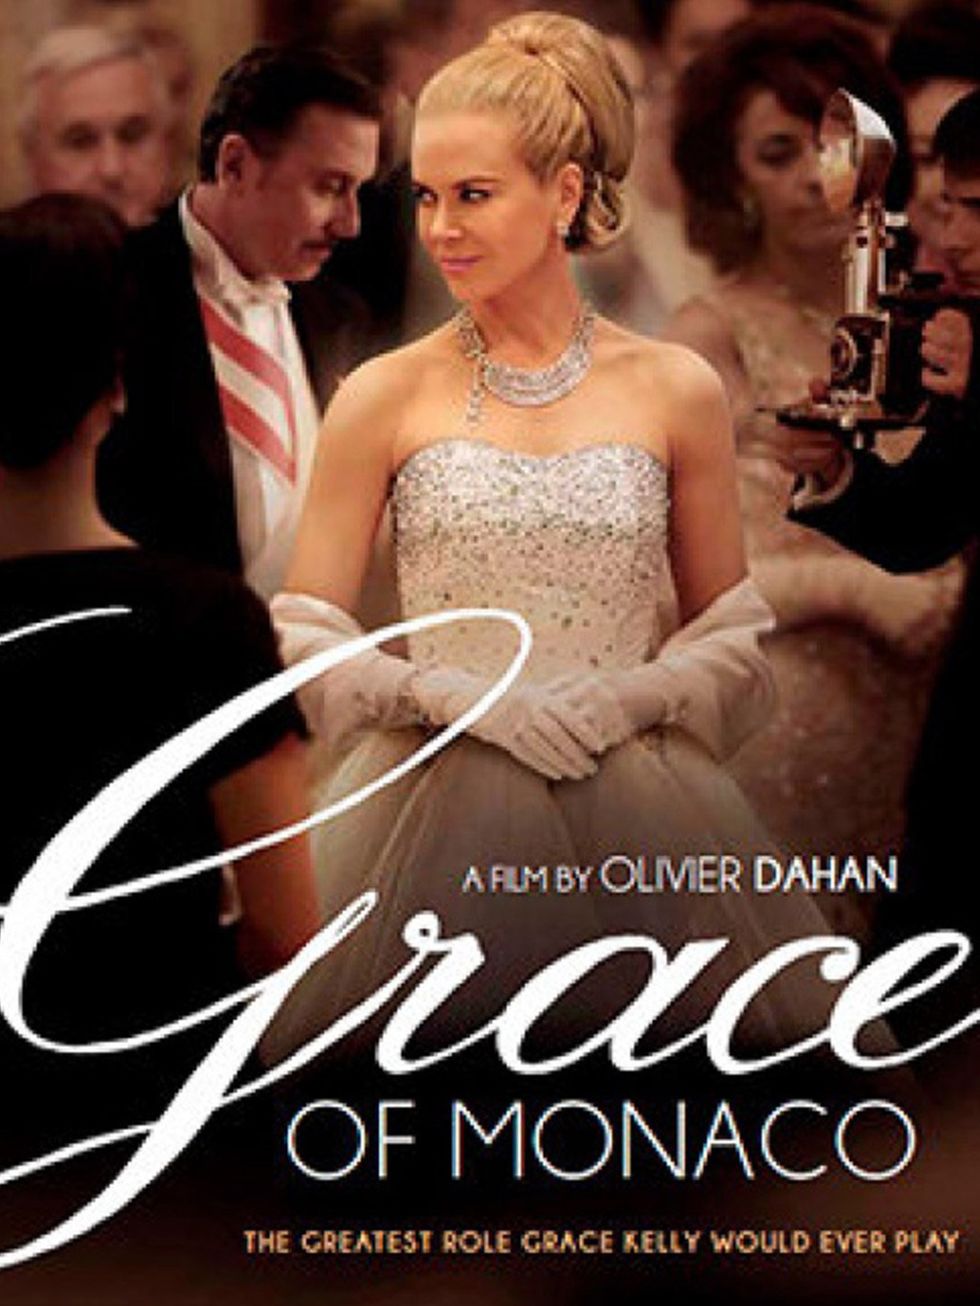 &lt;p&gt;&lt;strong&gt;FILM: Grace of Monaco&lt;/strong&gt; &lt;/p&gt;&lt;p&gt;The long anticipated biopic of &lt;a href=&quot;http://www.elleuk.com/star-style/news/nicole-kidman-grace-of-monaco-trailer-released&quot;&gt;Grace Kelly&lt;/a&gt;&rsquo;s life